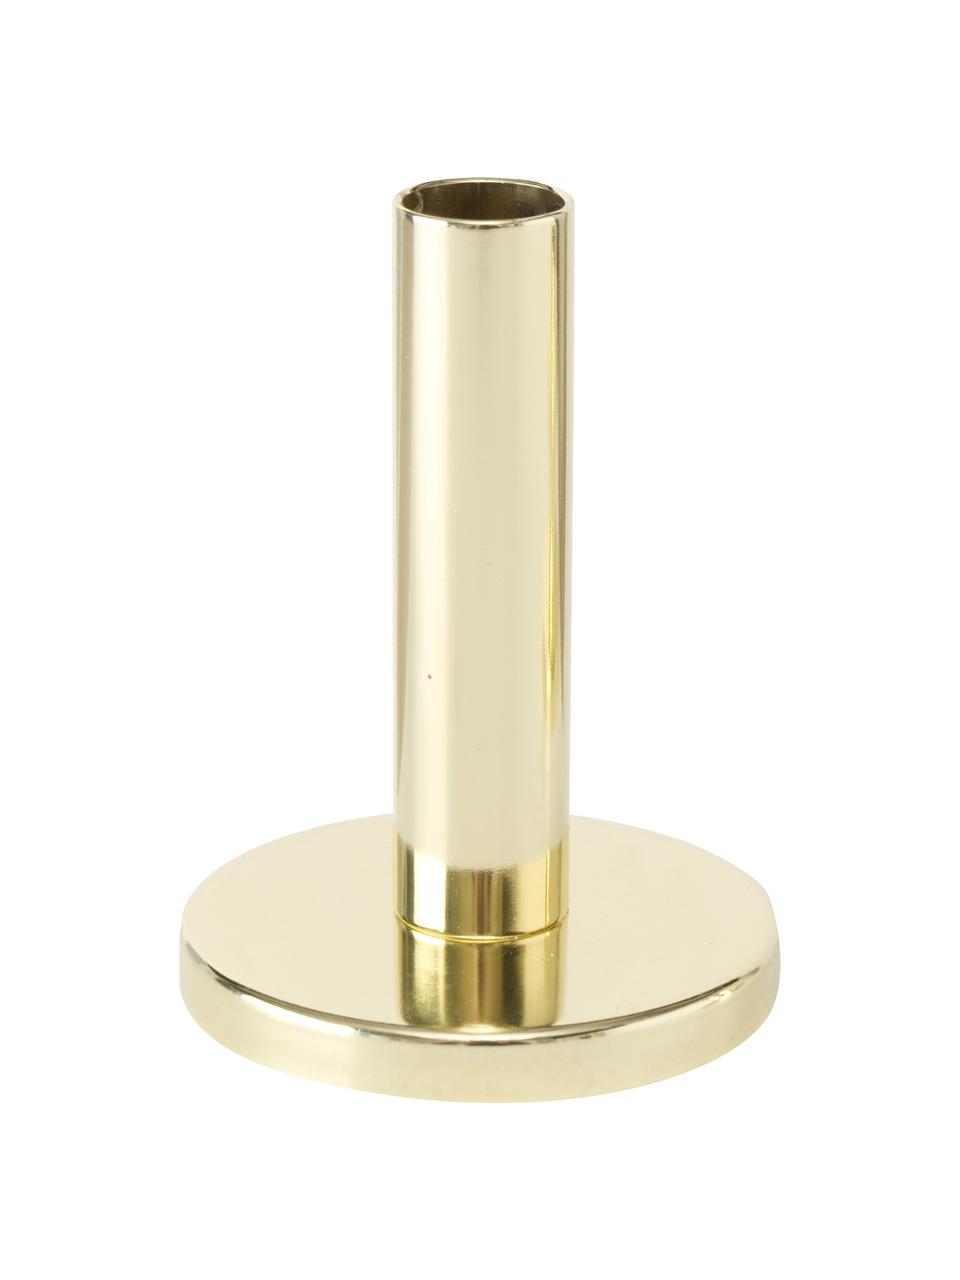 Kerzenhalter-Set Malko, 3-tlg., Metall, beschichtet, Goldfarben, Sondergrößen